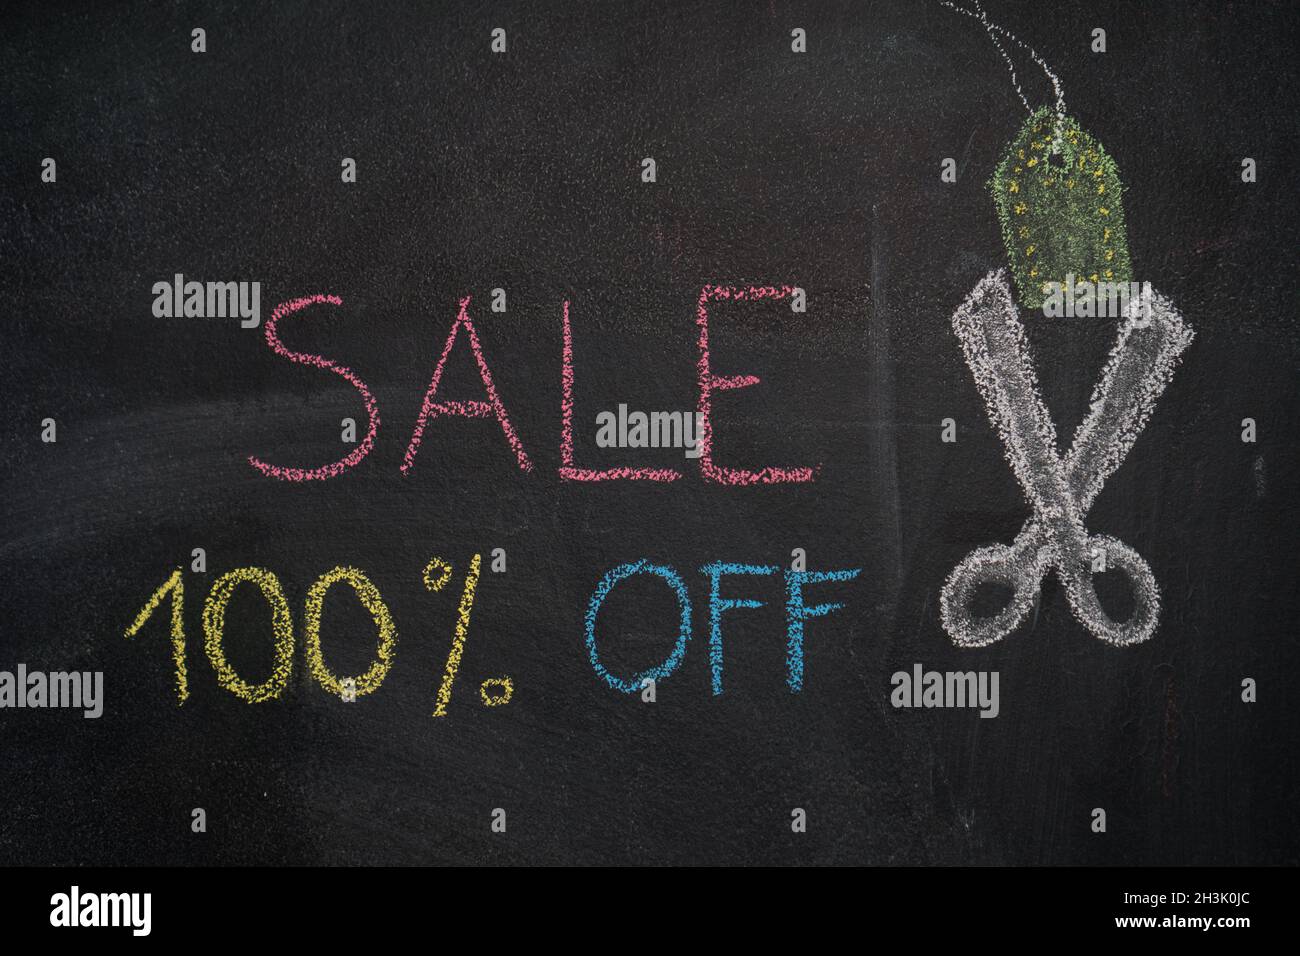 Sale 100% off on chalkboard Stock Photo